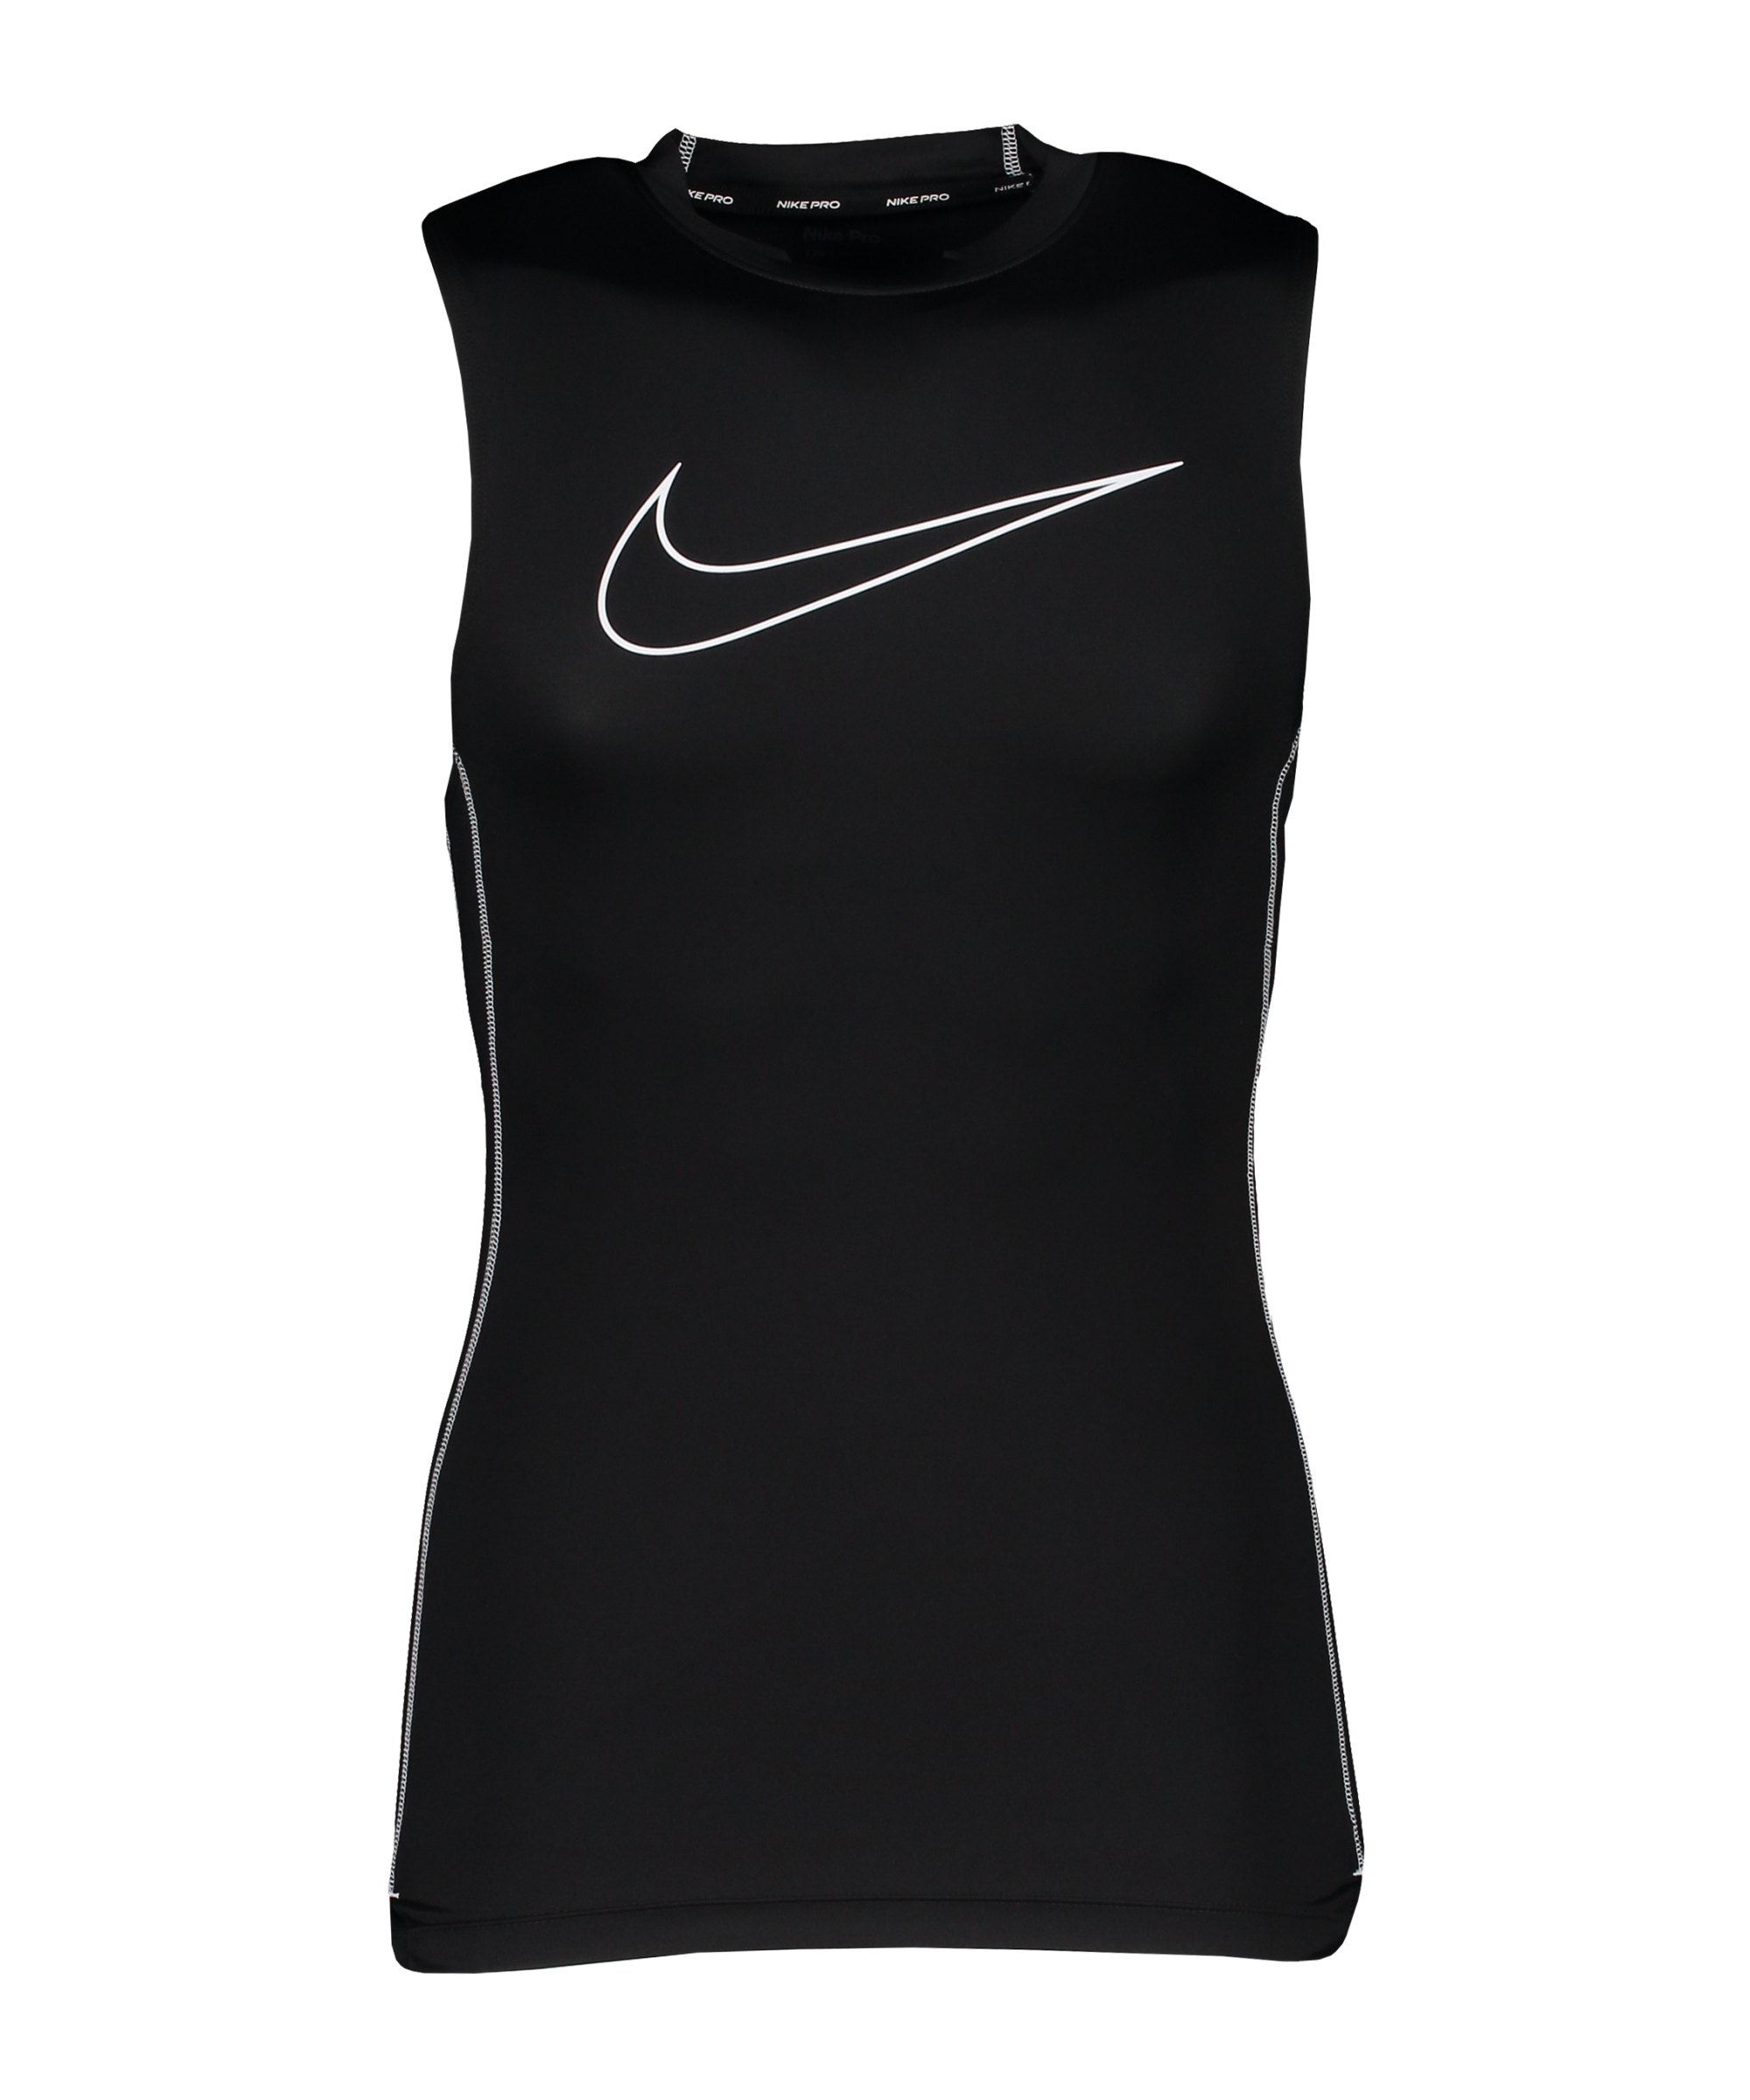 Nike Pro Tight-Fit Tanktop Schwarz Weiss F011 - schwarz